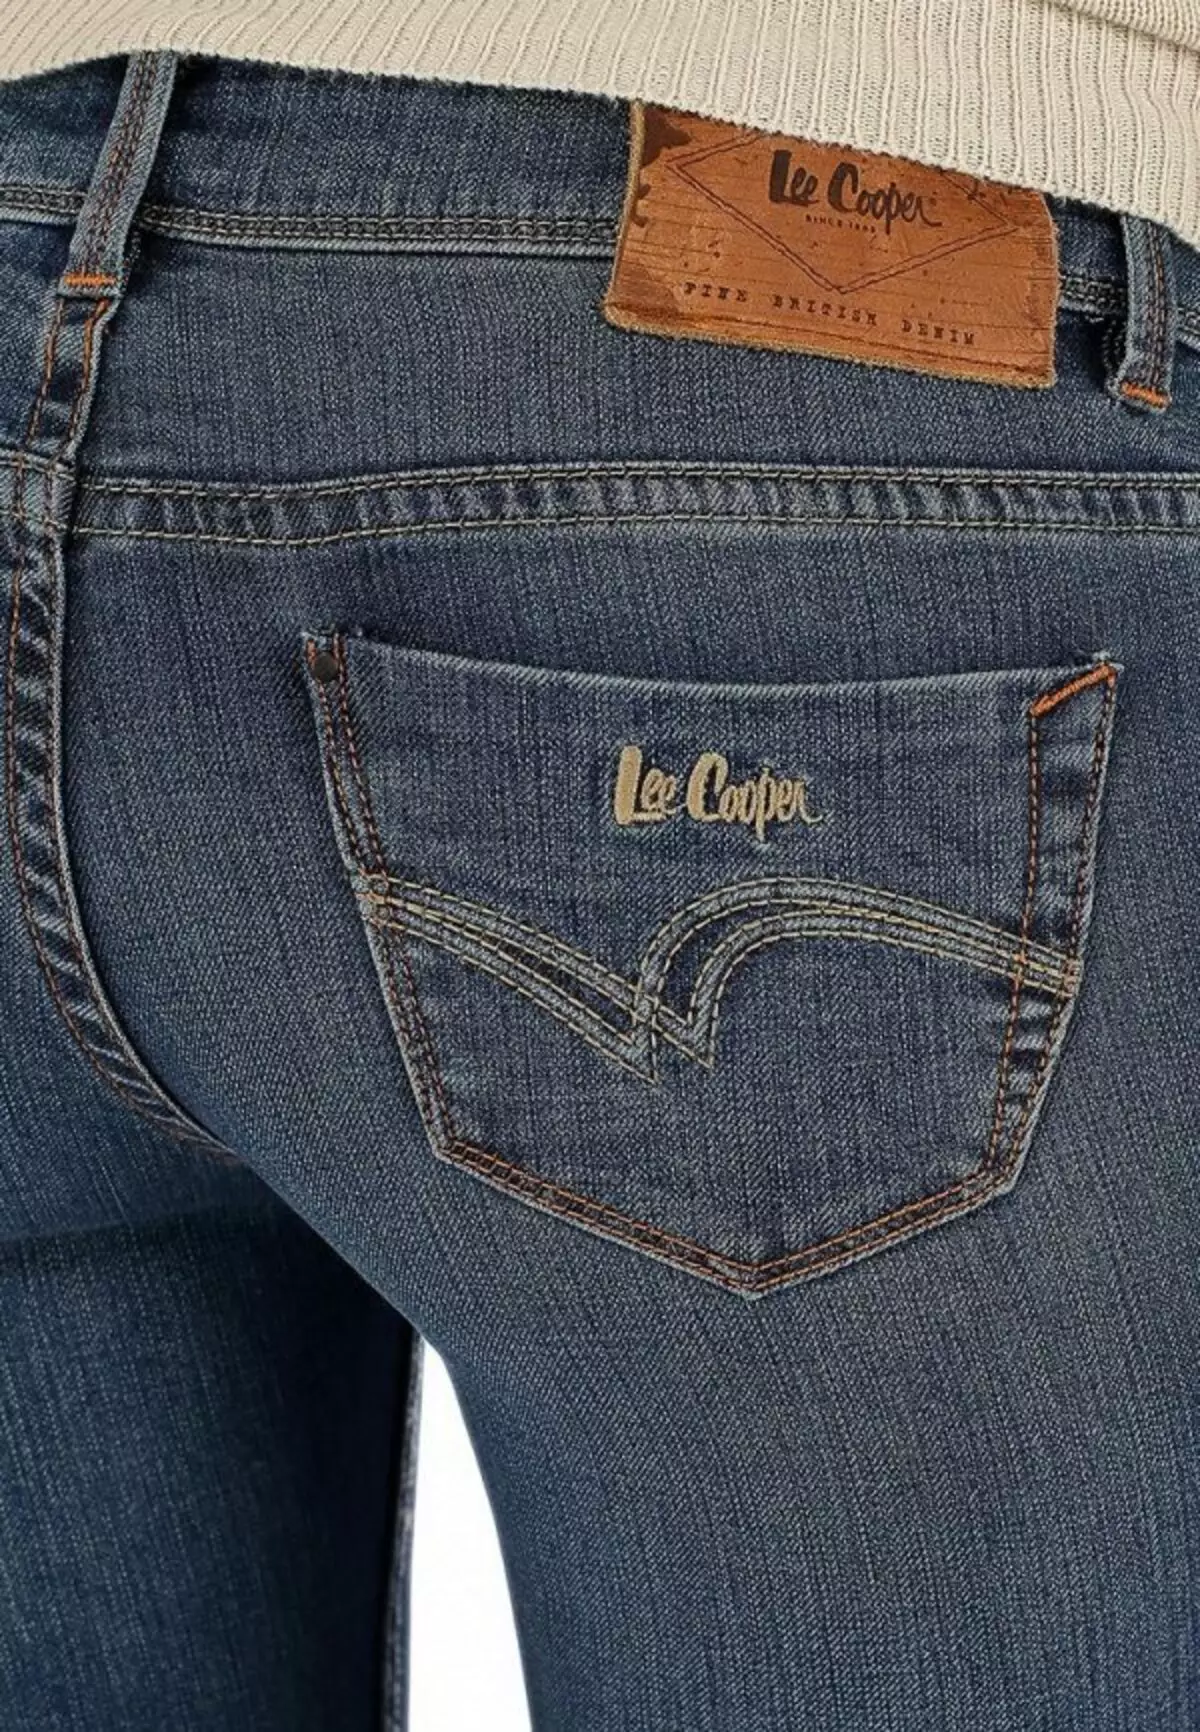 Li Cooper jeans (46 photos): female models Dimensional mesh, reviews 1093_37